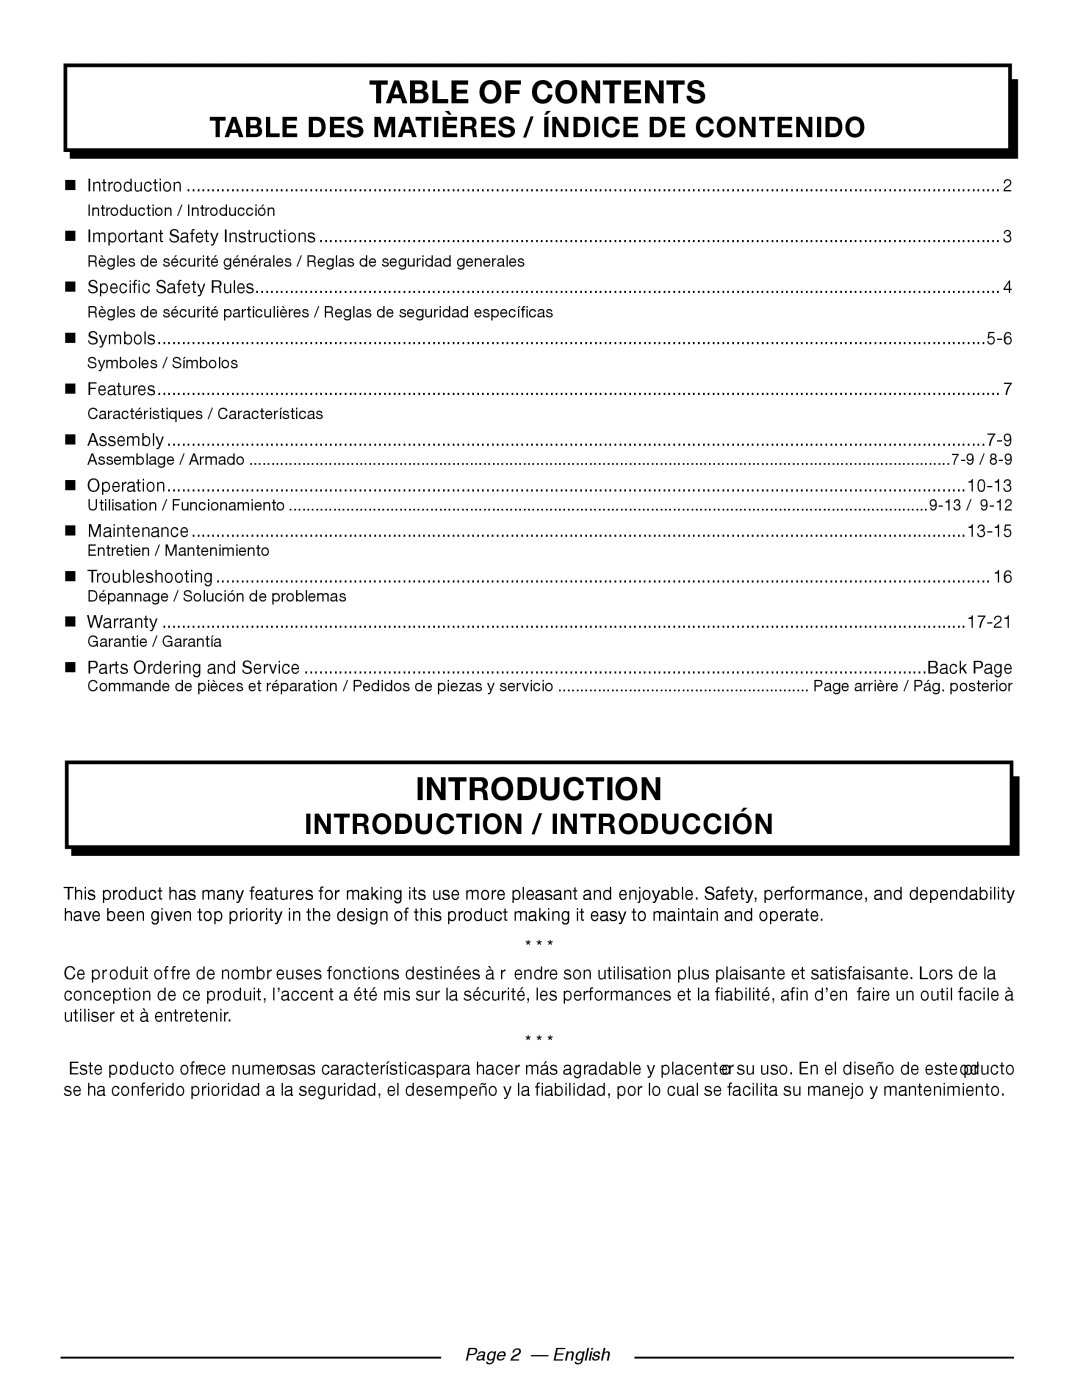 Homelite UT80911, UT80709 Table Of Contents, Table Des Matières / Índice De Contenido, Introduction / Introducción 